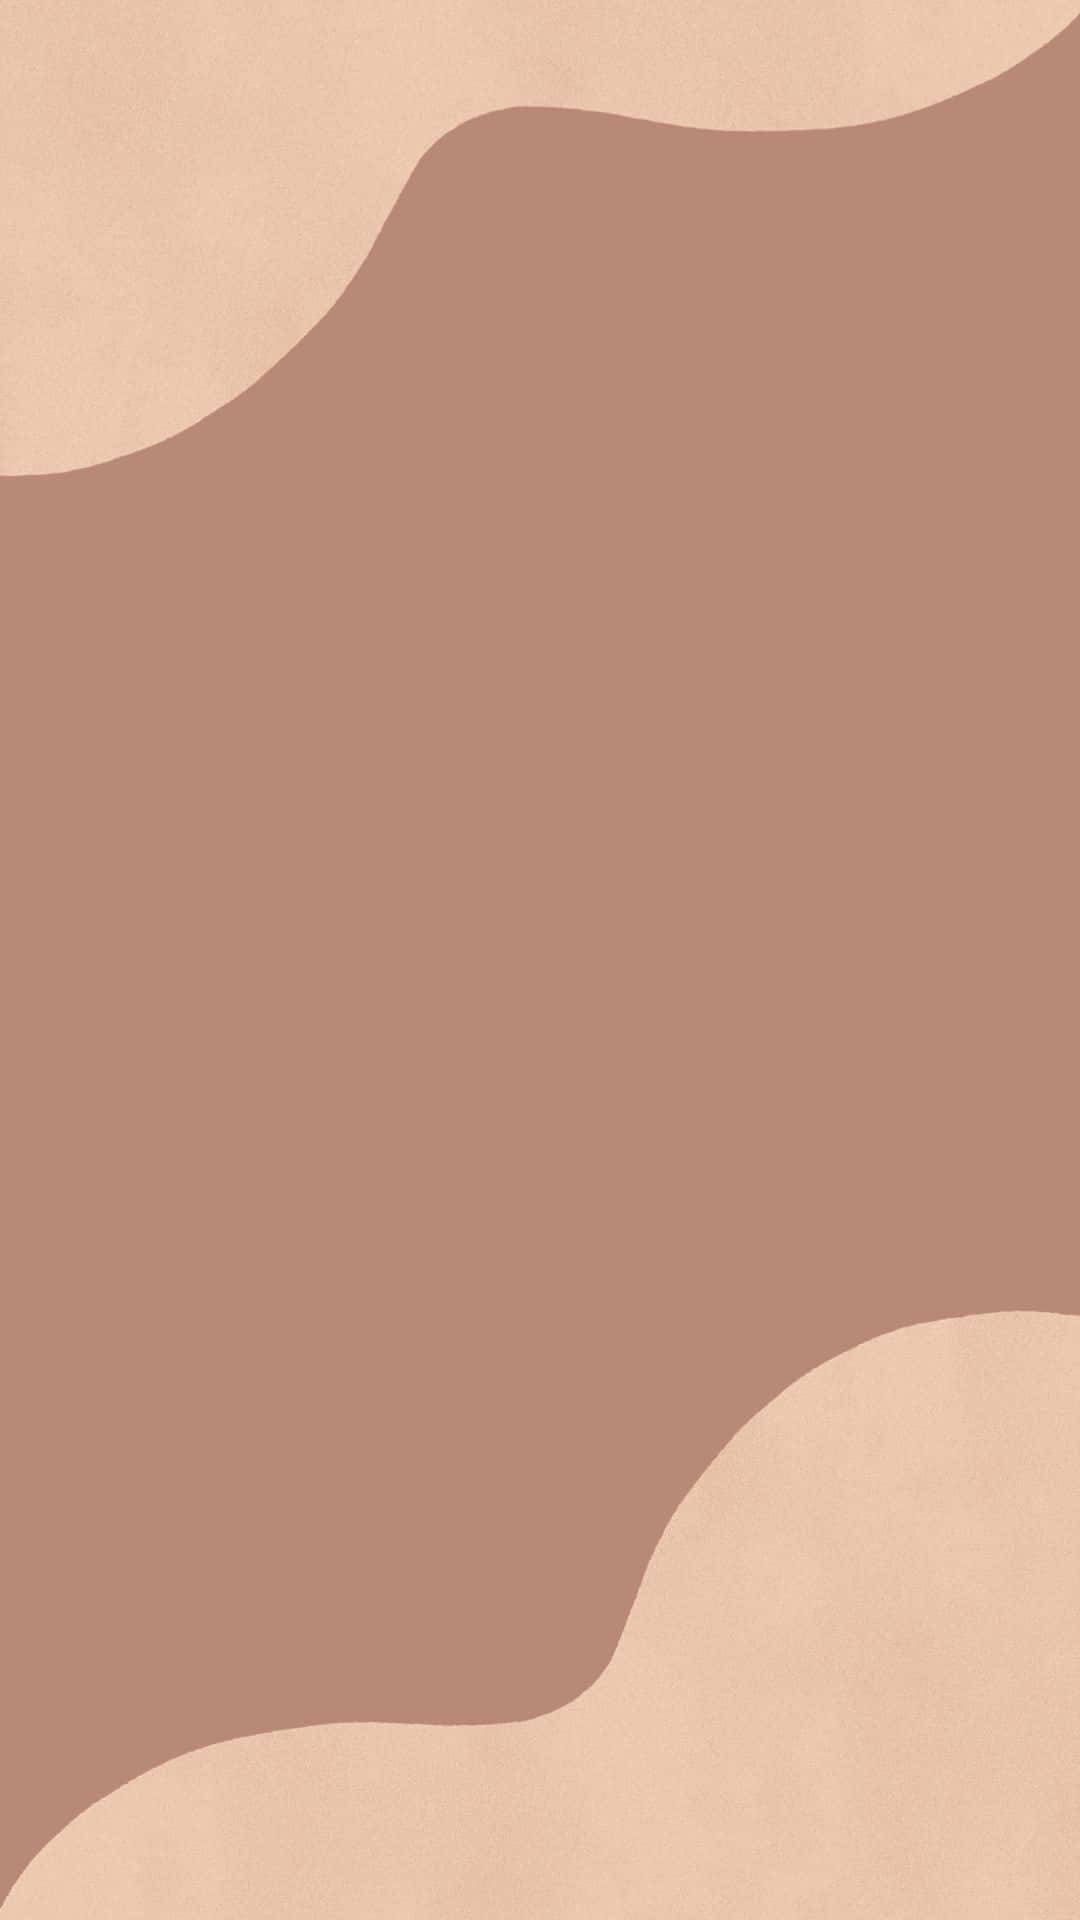 Aesthetic Instagram Pastel Brown Pattern Background